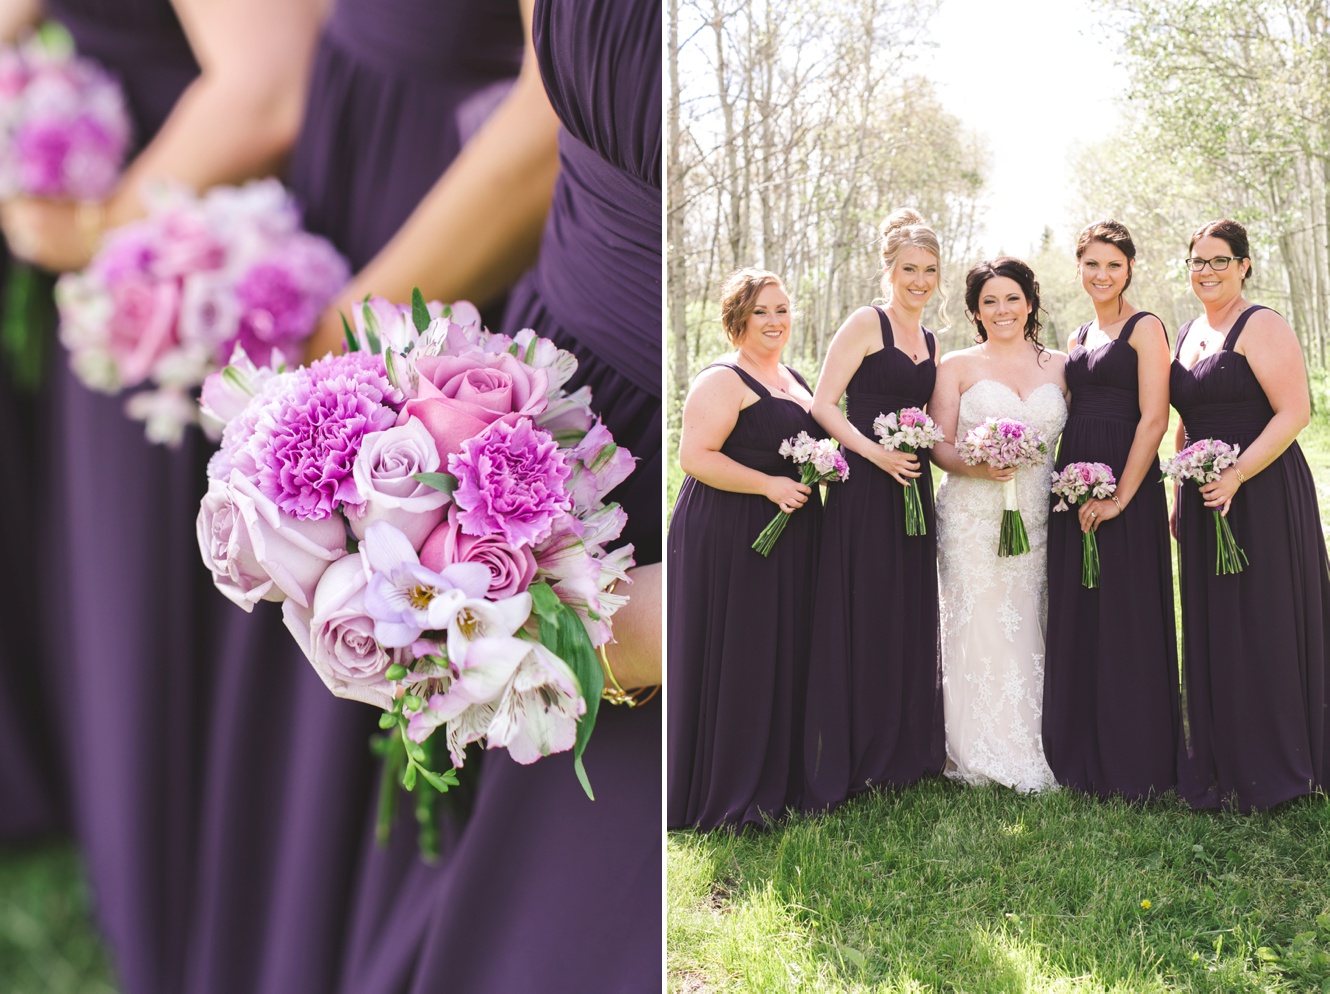 Lavender rose wedding bouquet